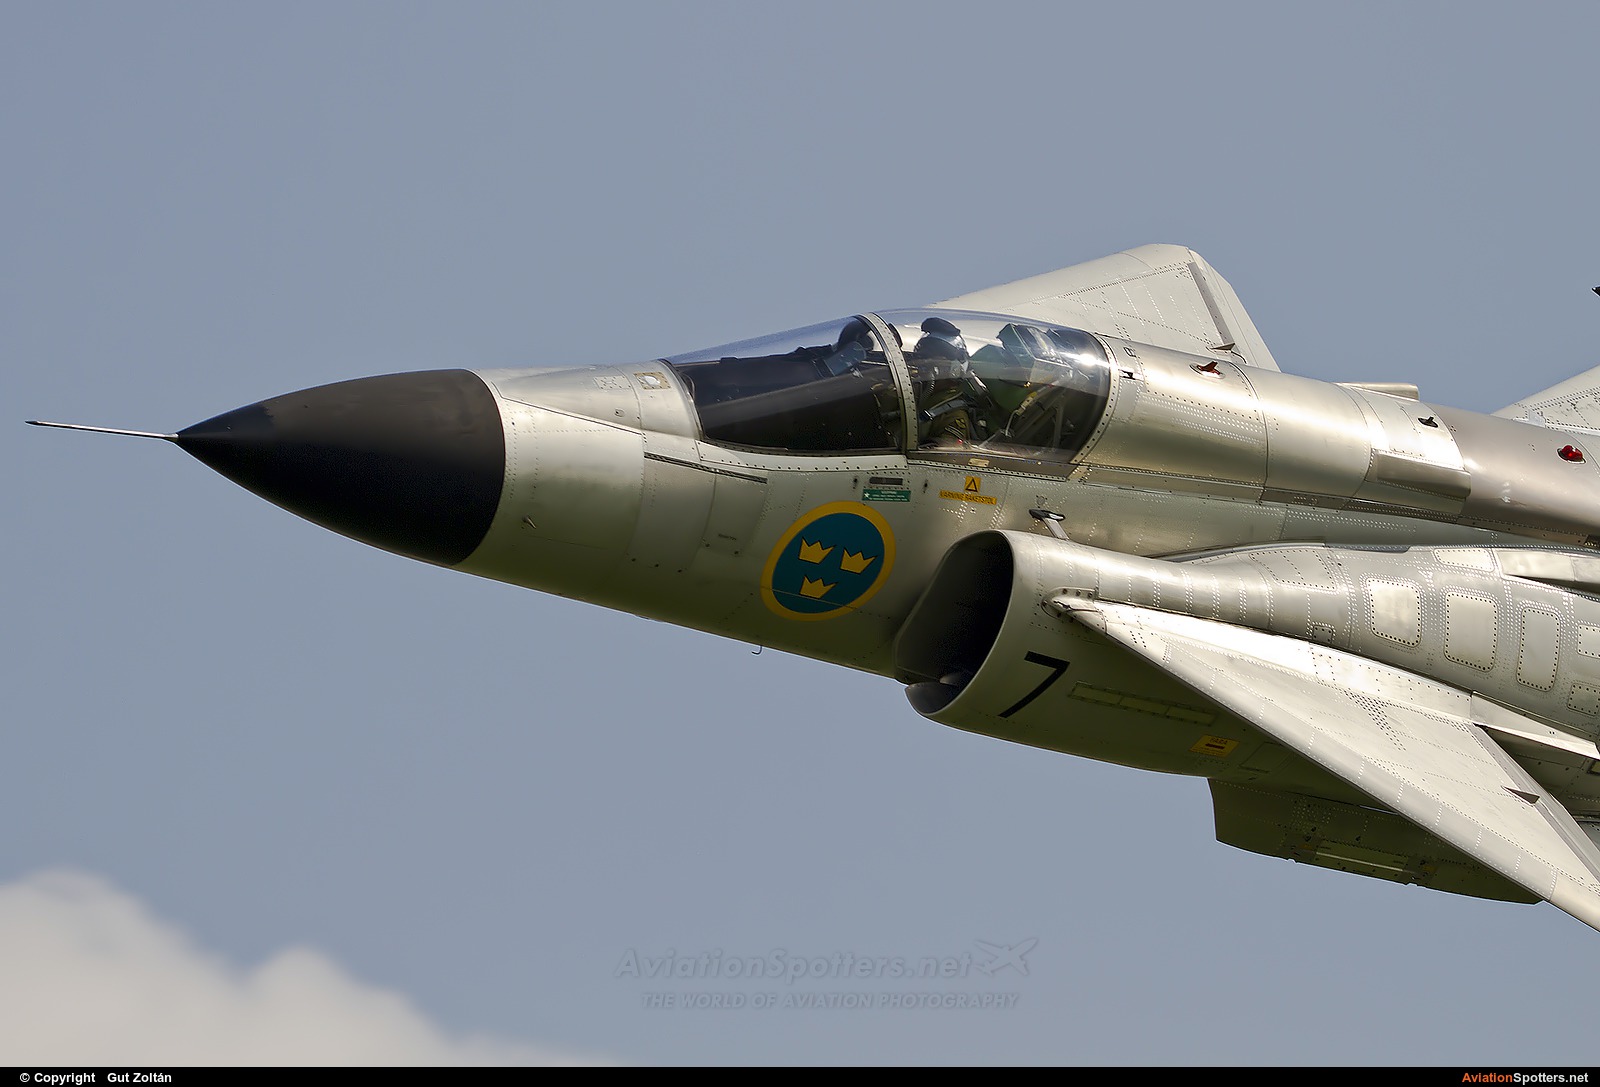 Swedish Air Force Historic Flight  -  AJS 37 Viggen  (SE-DXN) By Gut Zoltán (gut zoltan)